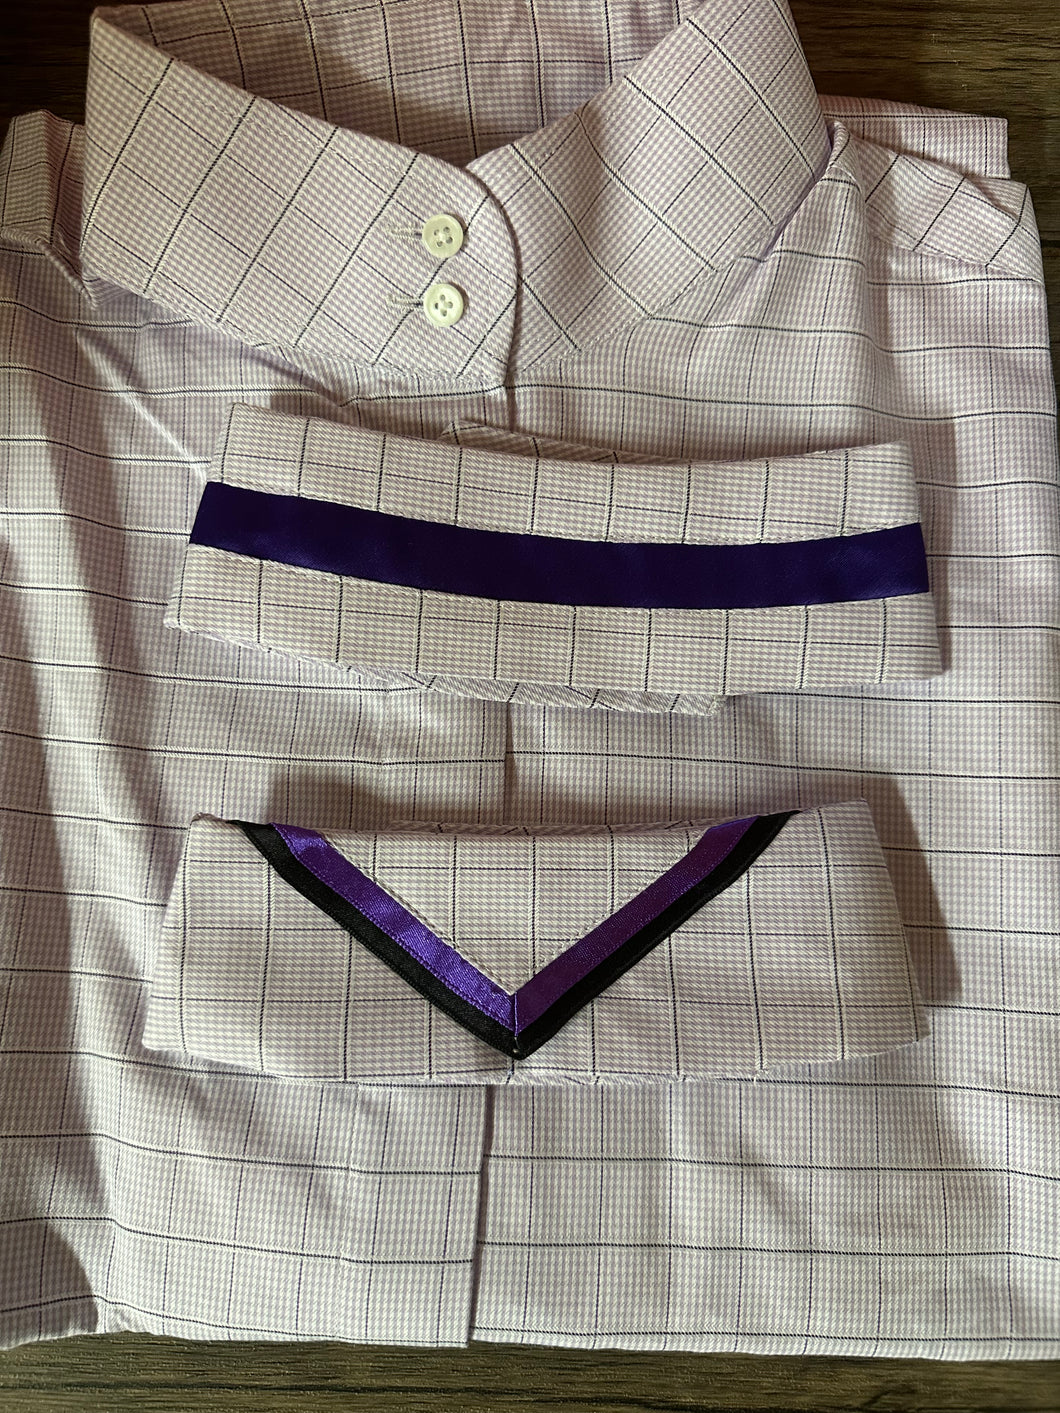 Light Purple Squares - 2 Collars - Size 36